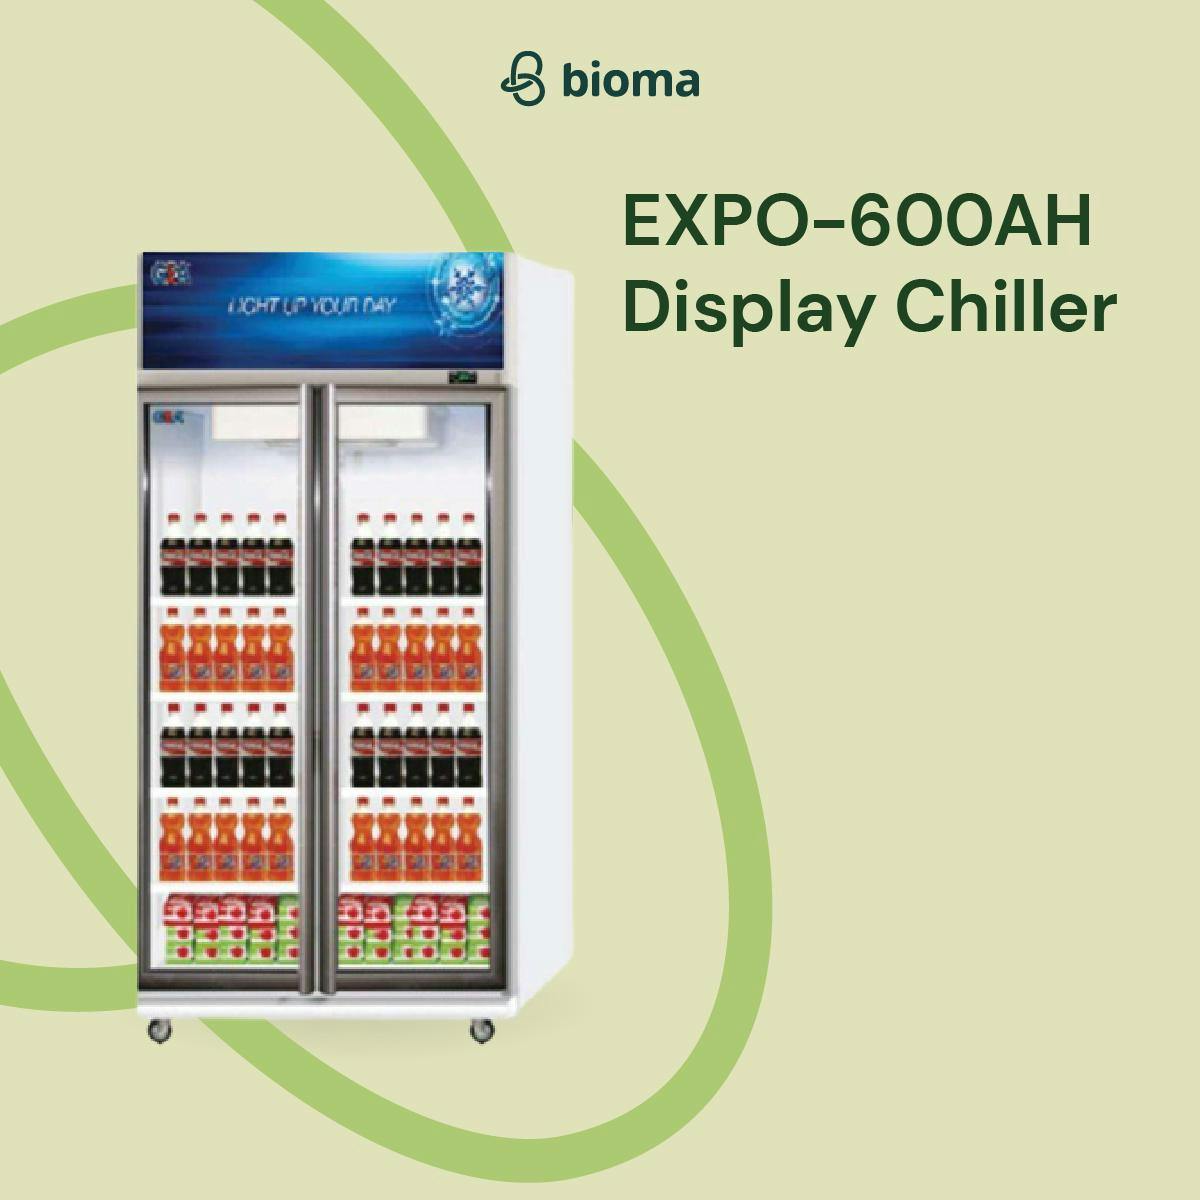 EXPO-600AH Display Chiller